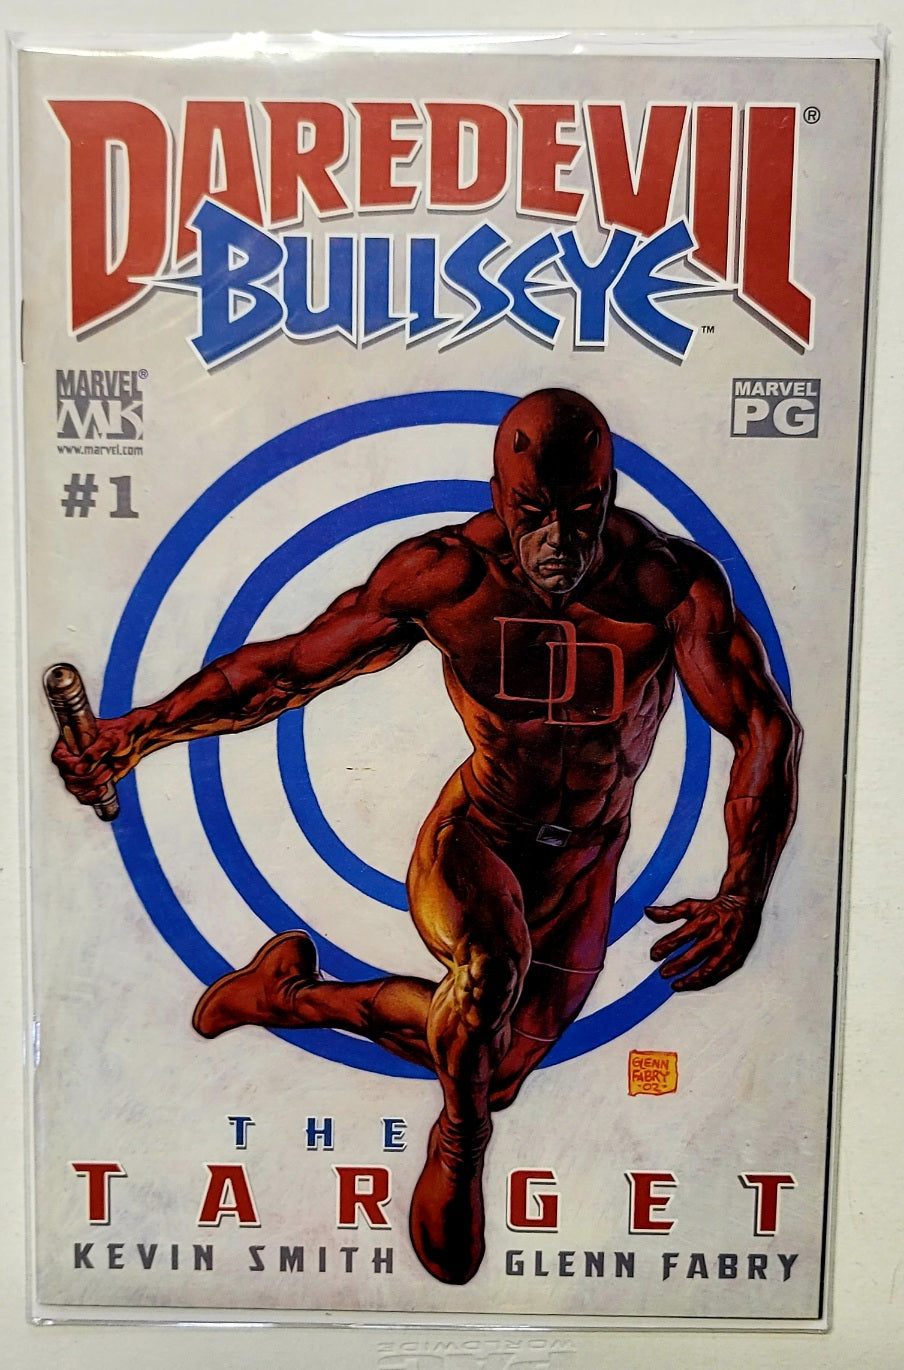 Daredevil the Bullseye - #1 漫威漫画 + 数字版